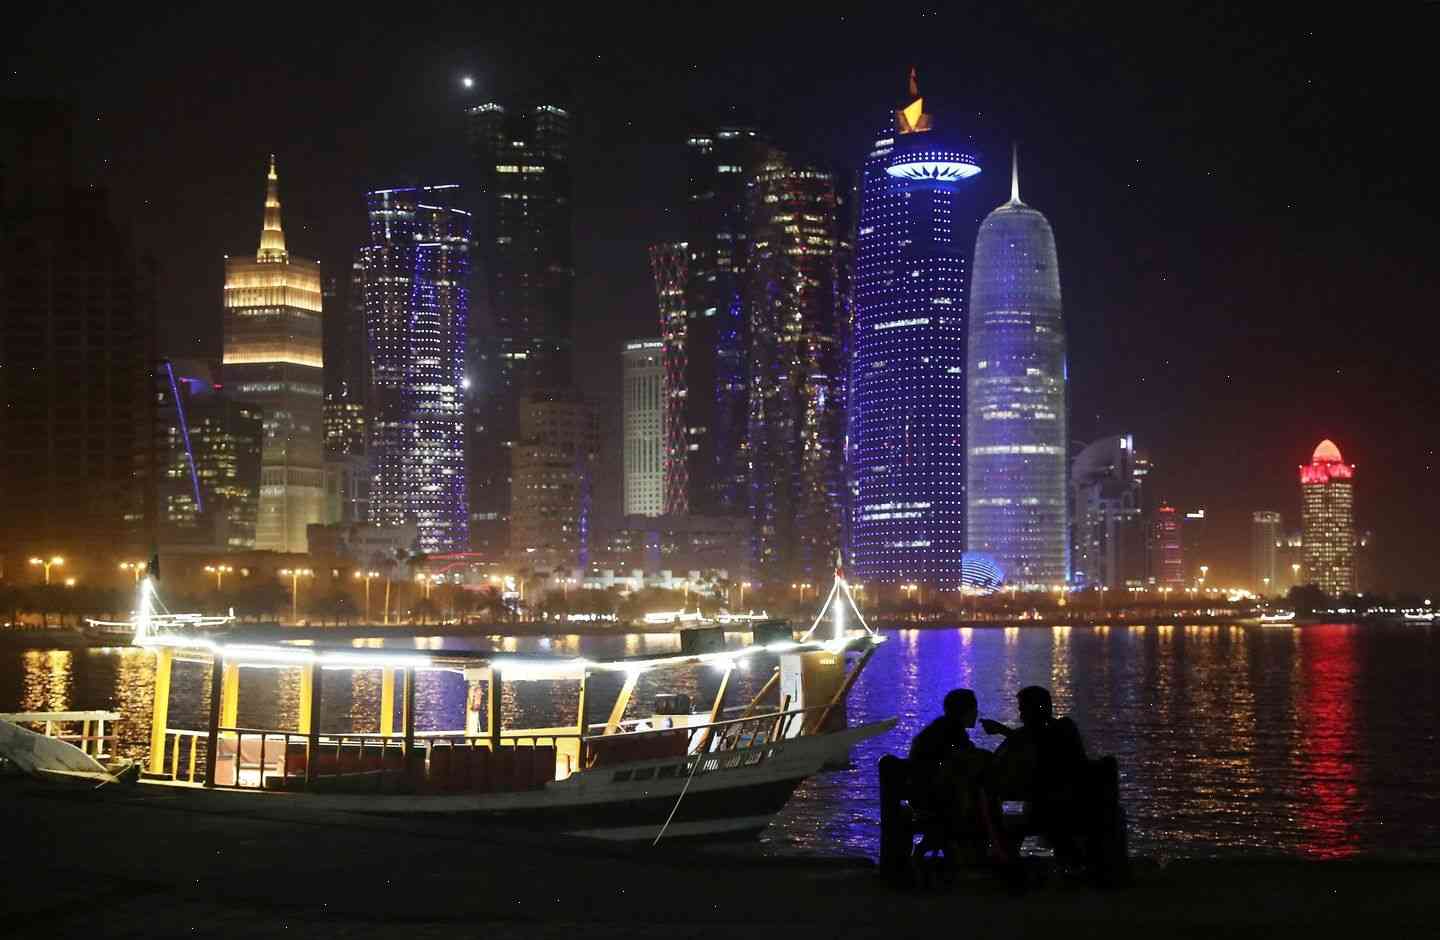 Qatar bids to host the 2022 World Cup